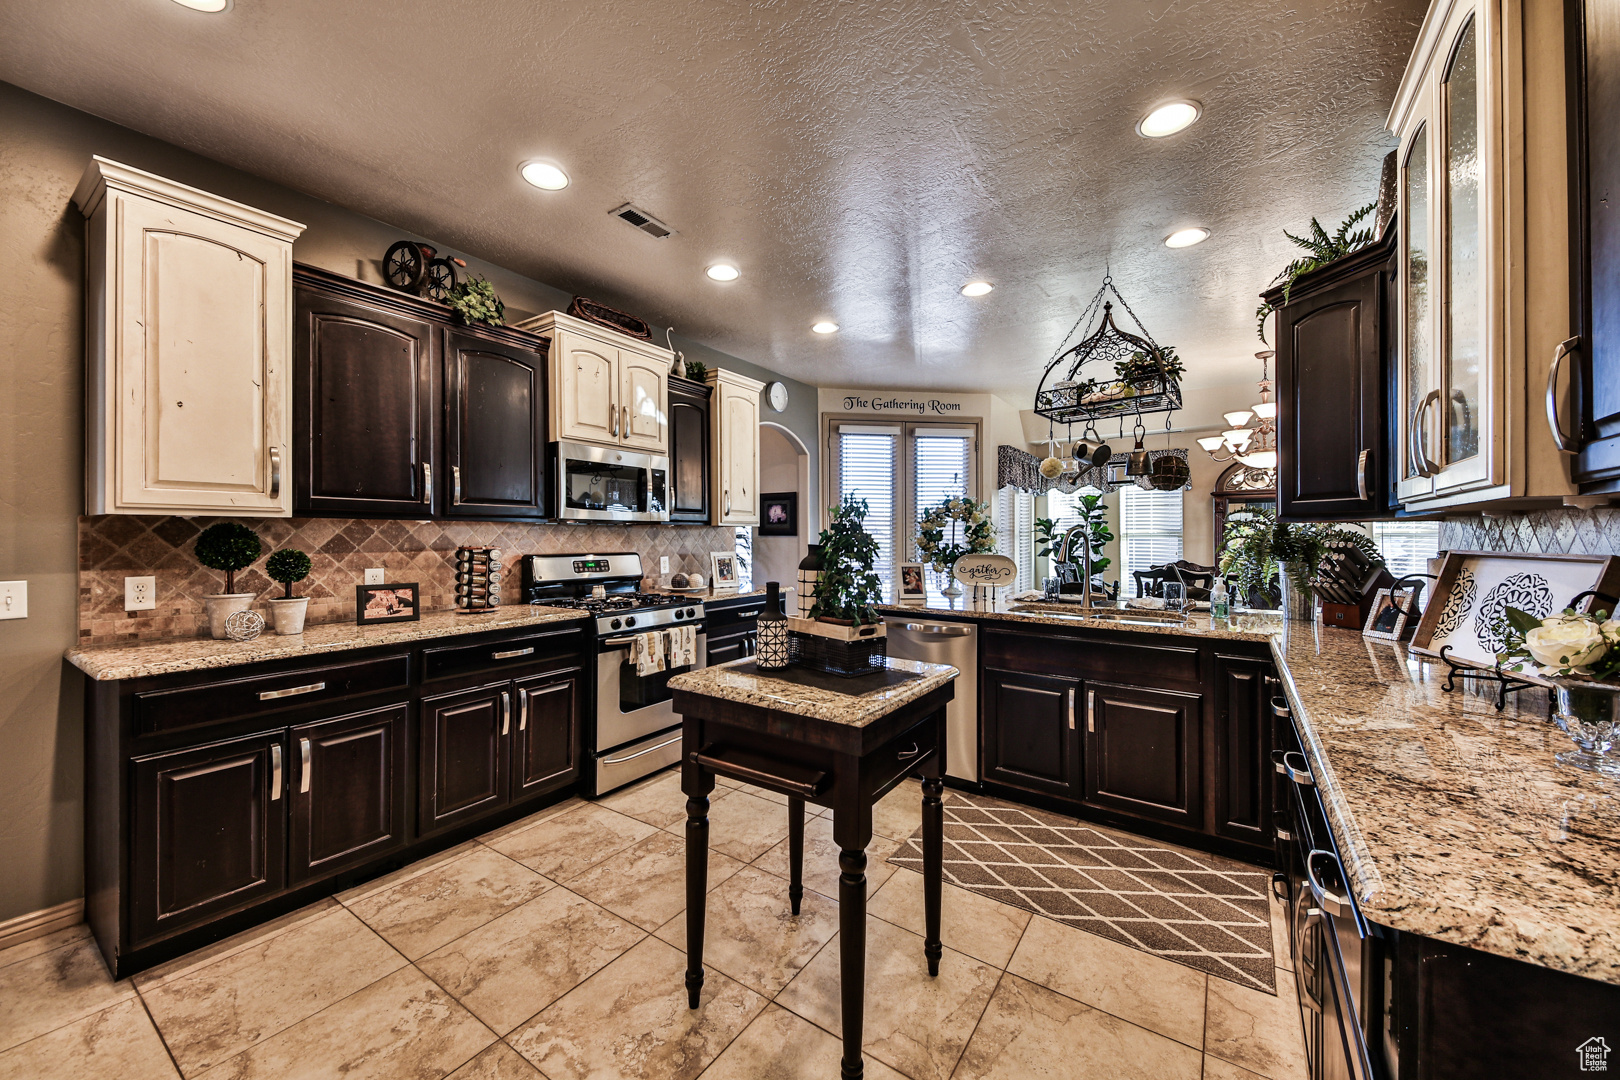 Kitchen featuring light tile flooring, stainless steel appliances, sink, tasteful backsplash, and a textured ceiling